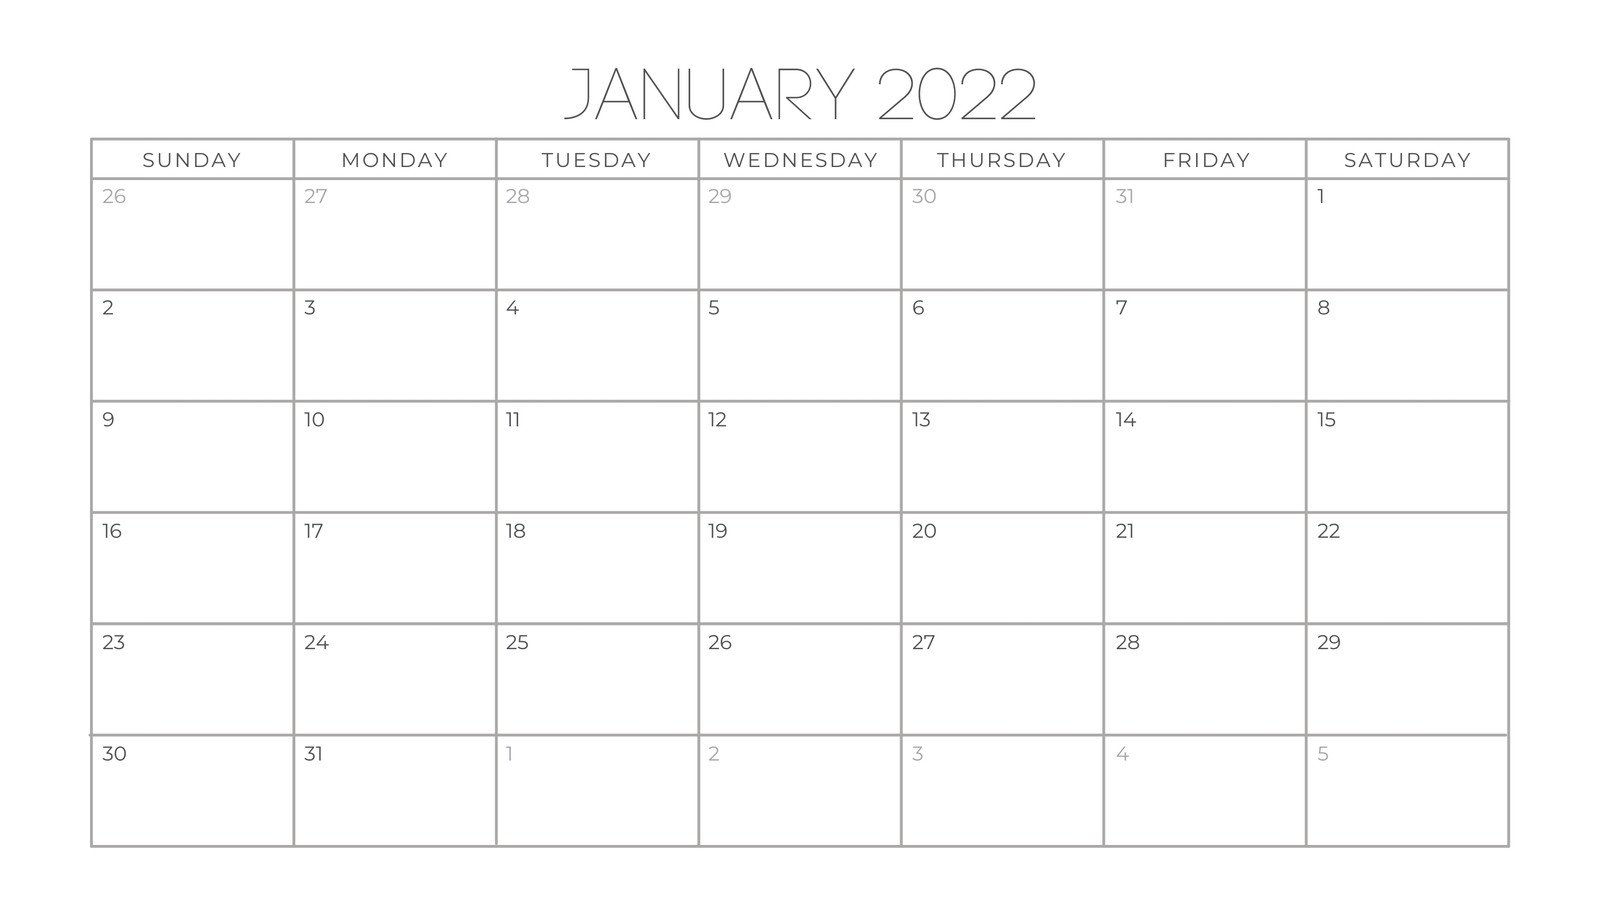 Template For Calendar 2022 Free And Customizable Calendar Templates | Canva